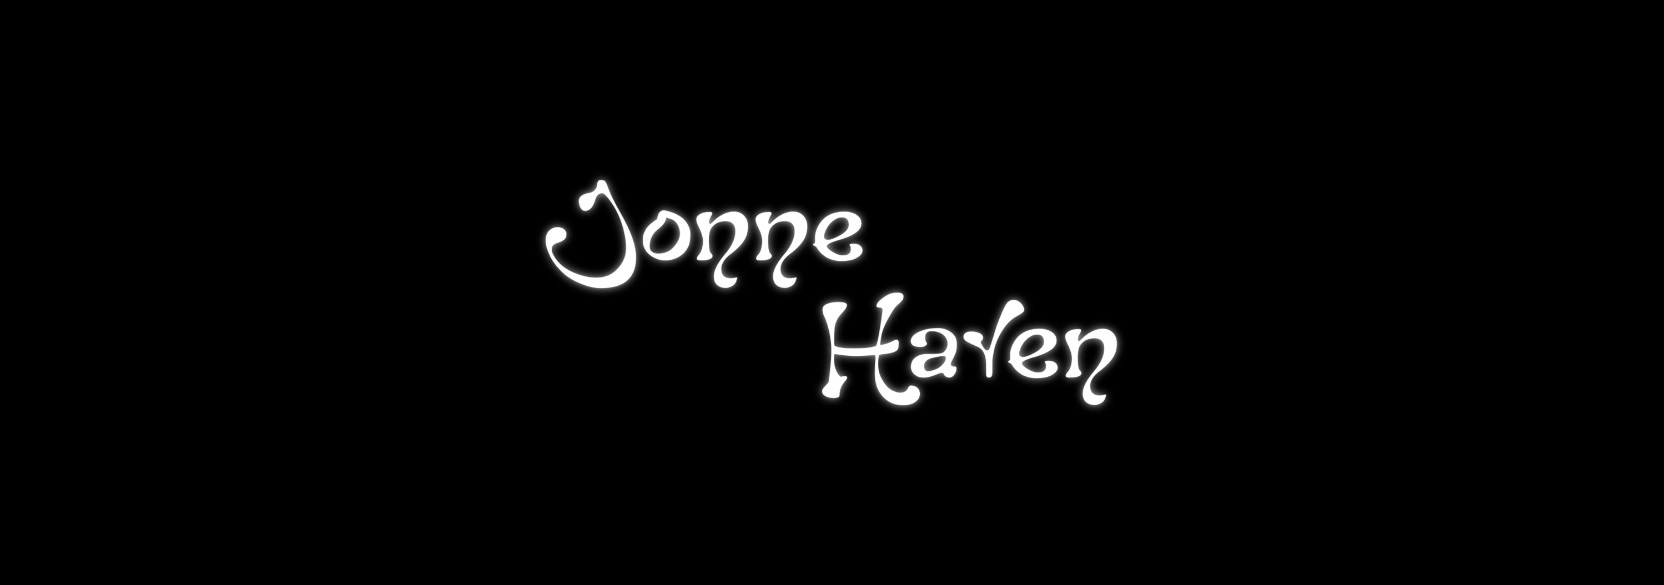 Jonne Haven Video Signature v 7.756.jpg